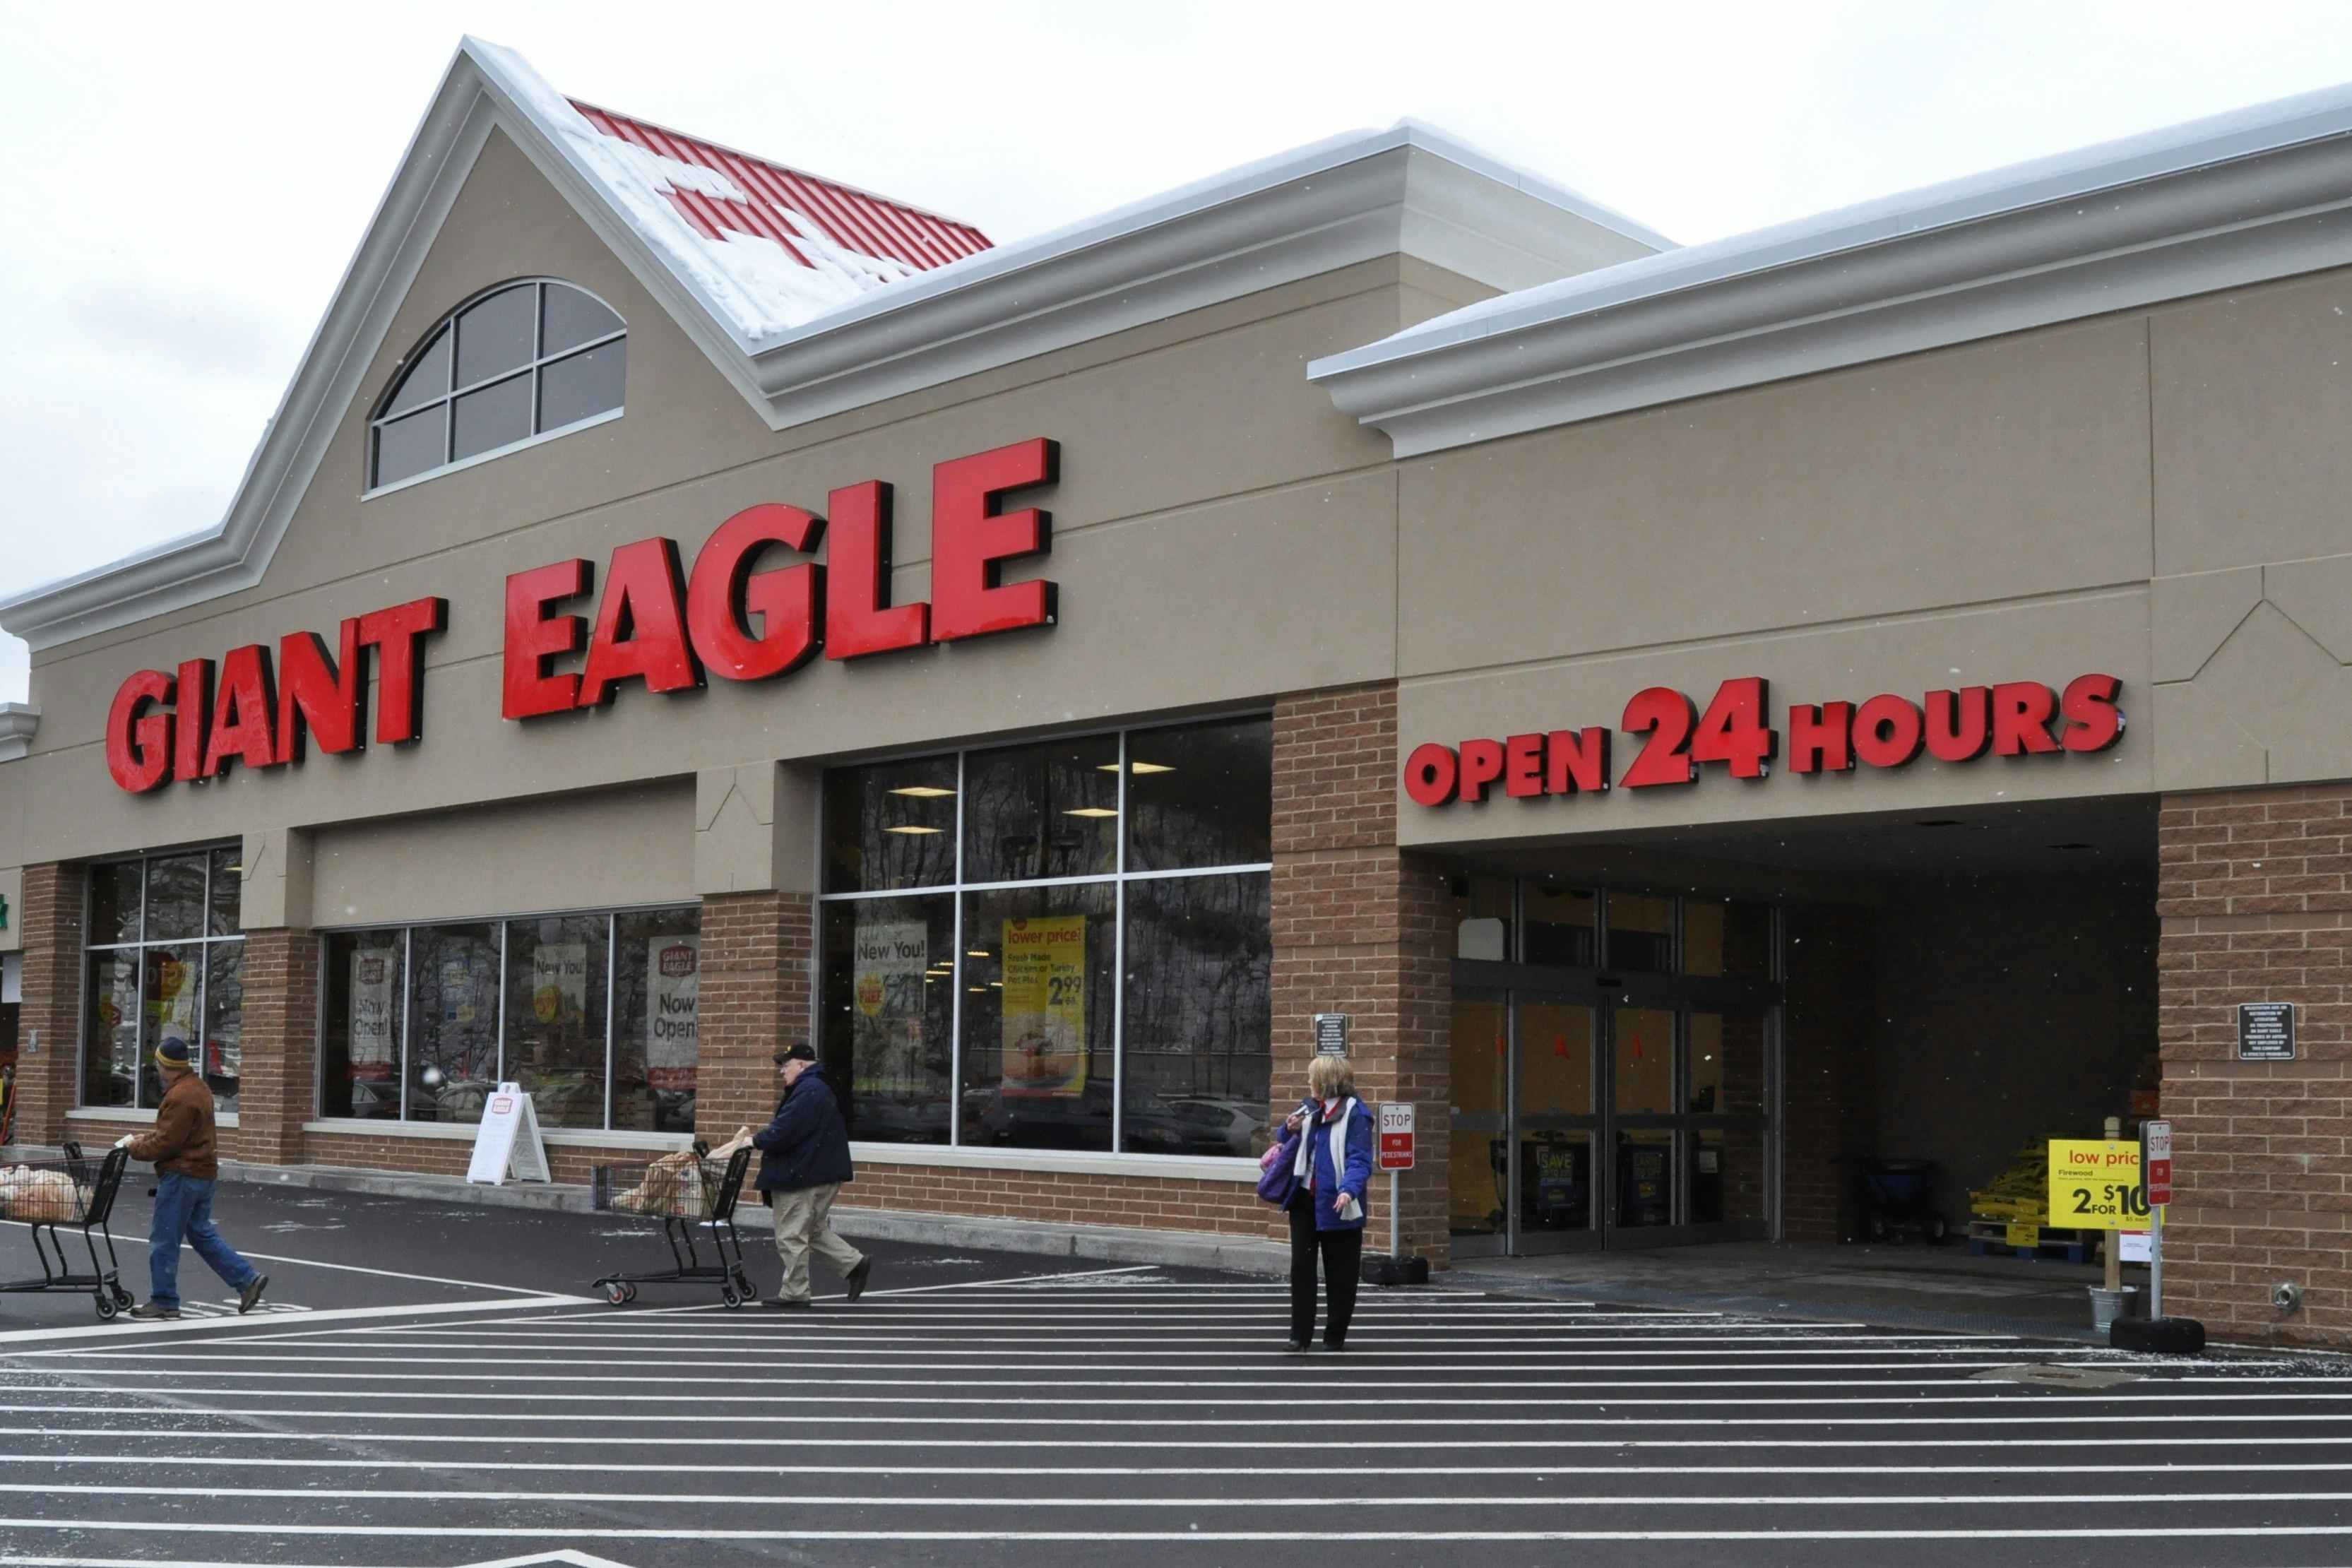 Giant Eagle storefront